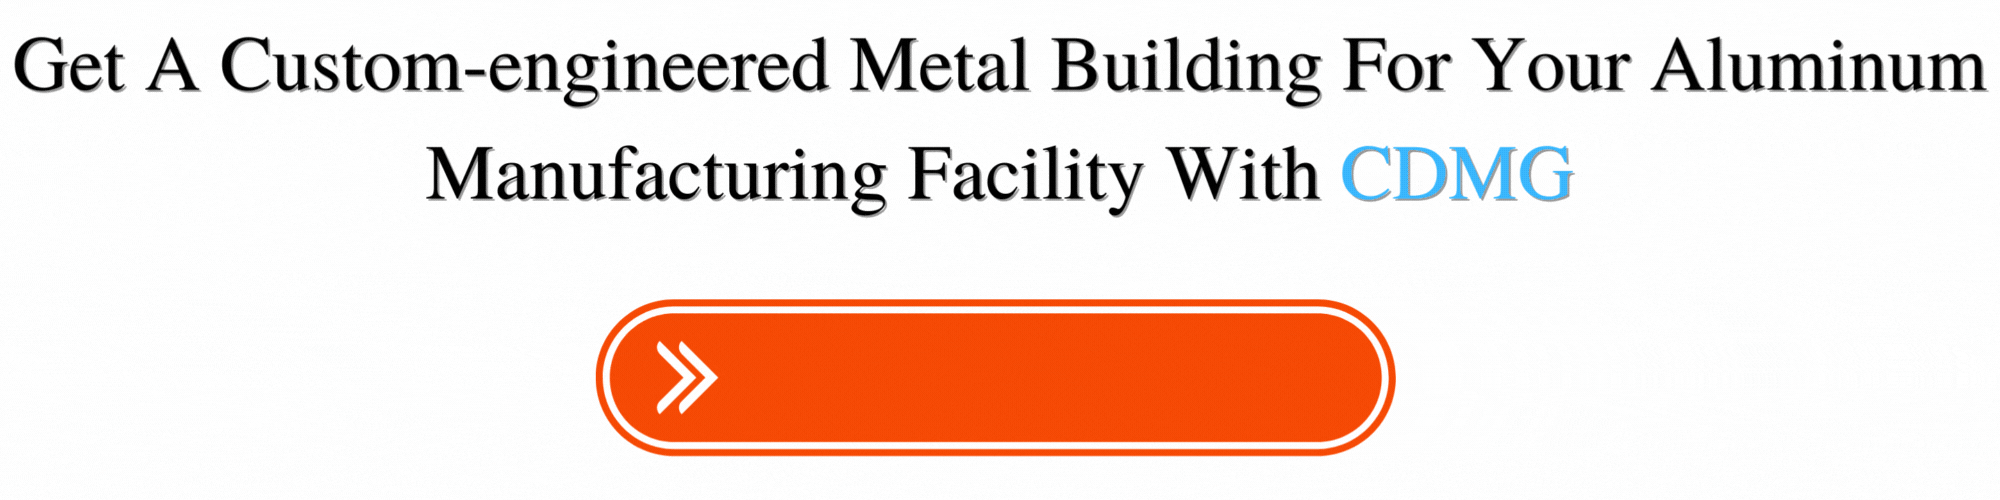 get-your-industrial-metal-building-quote